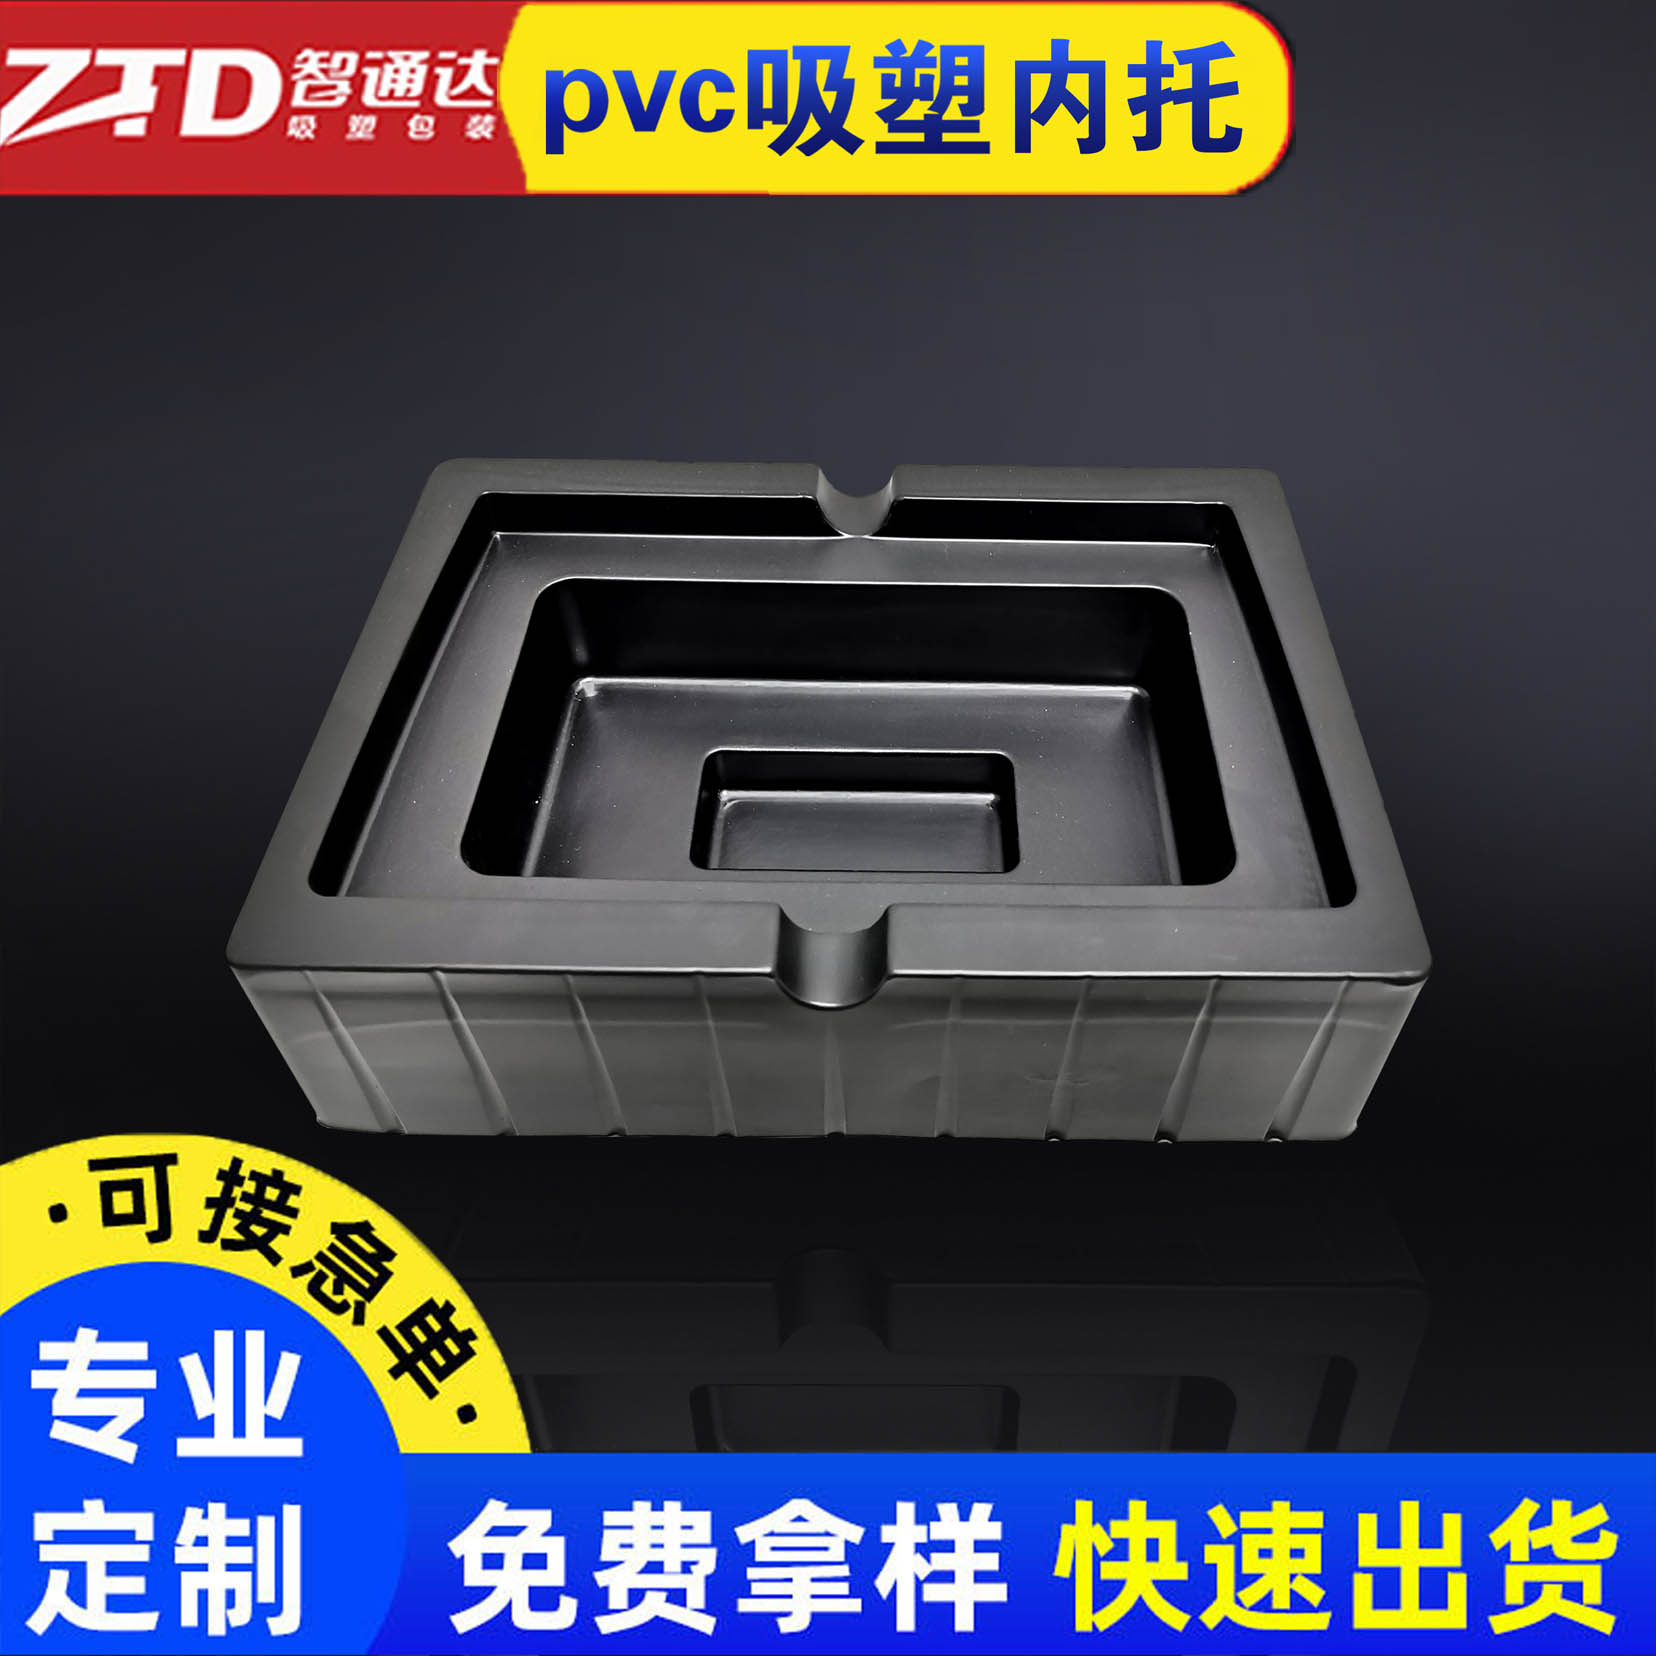 pvc吸塑内托 pvc泡壳 pvc吸塑托盘-深圳智通达吸塑制品厂家